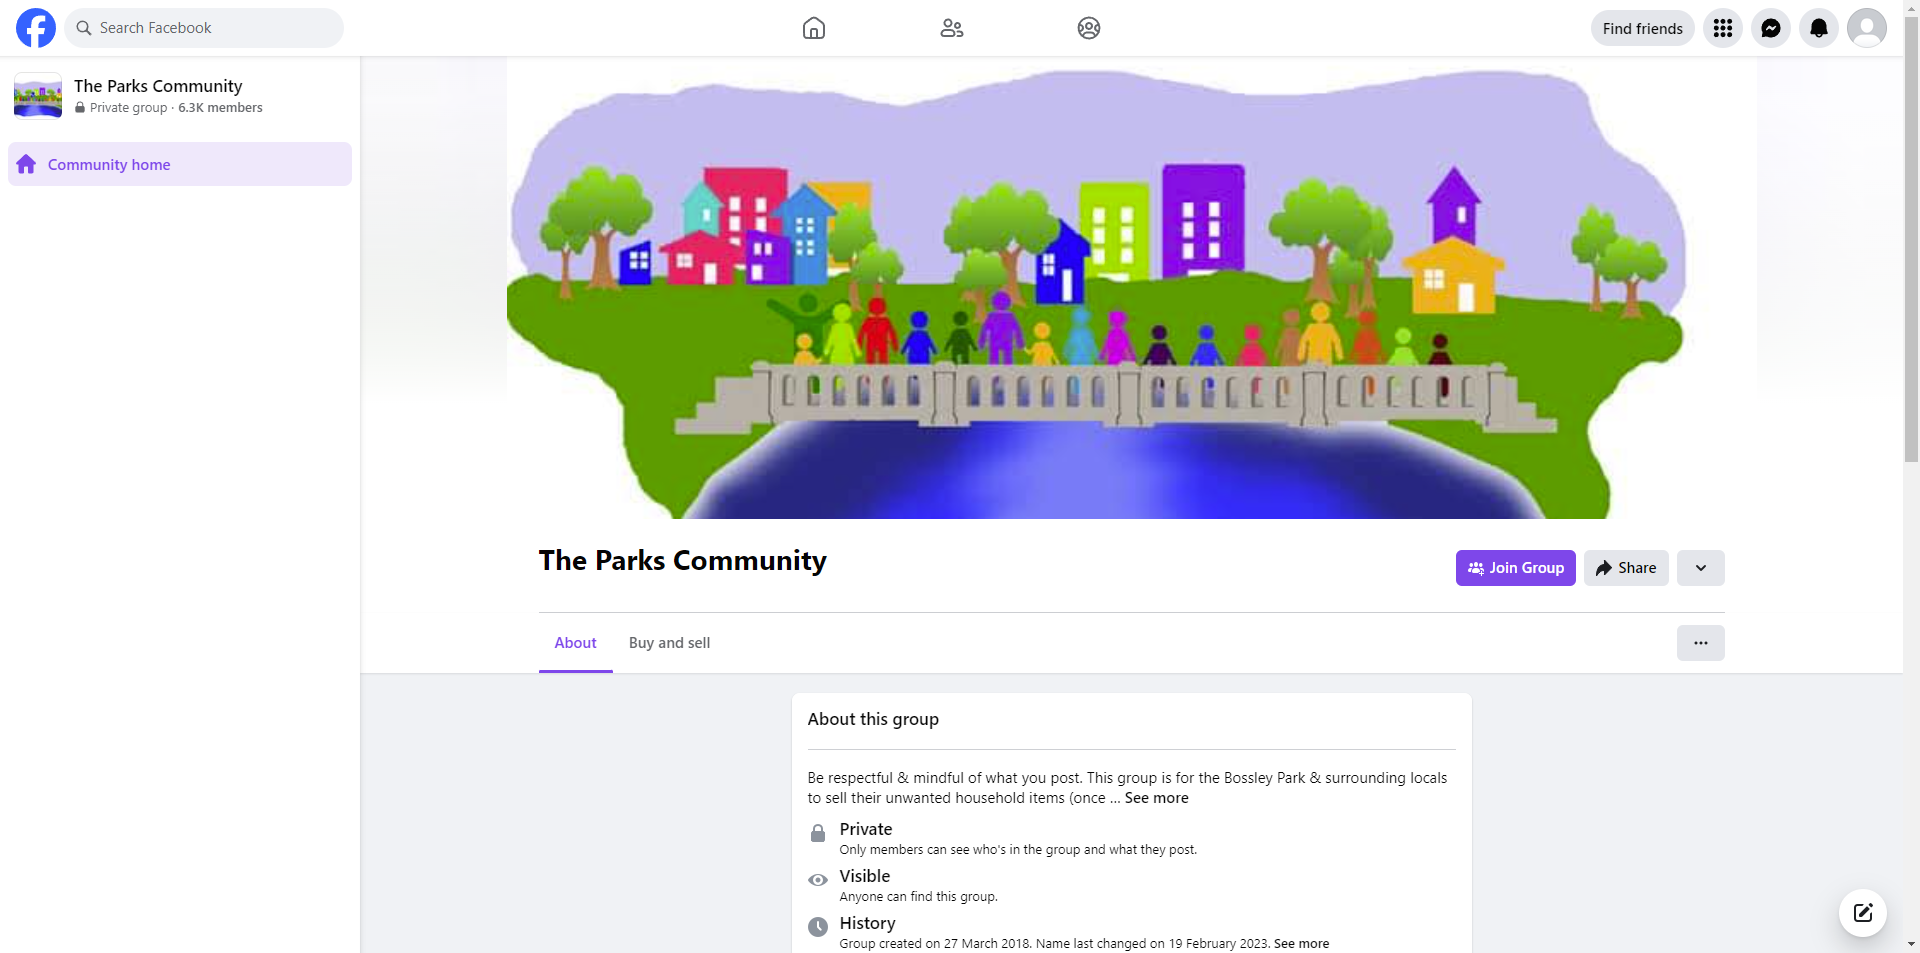 The Parks Community